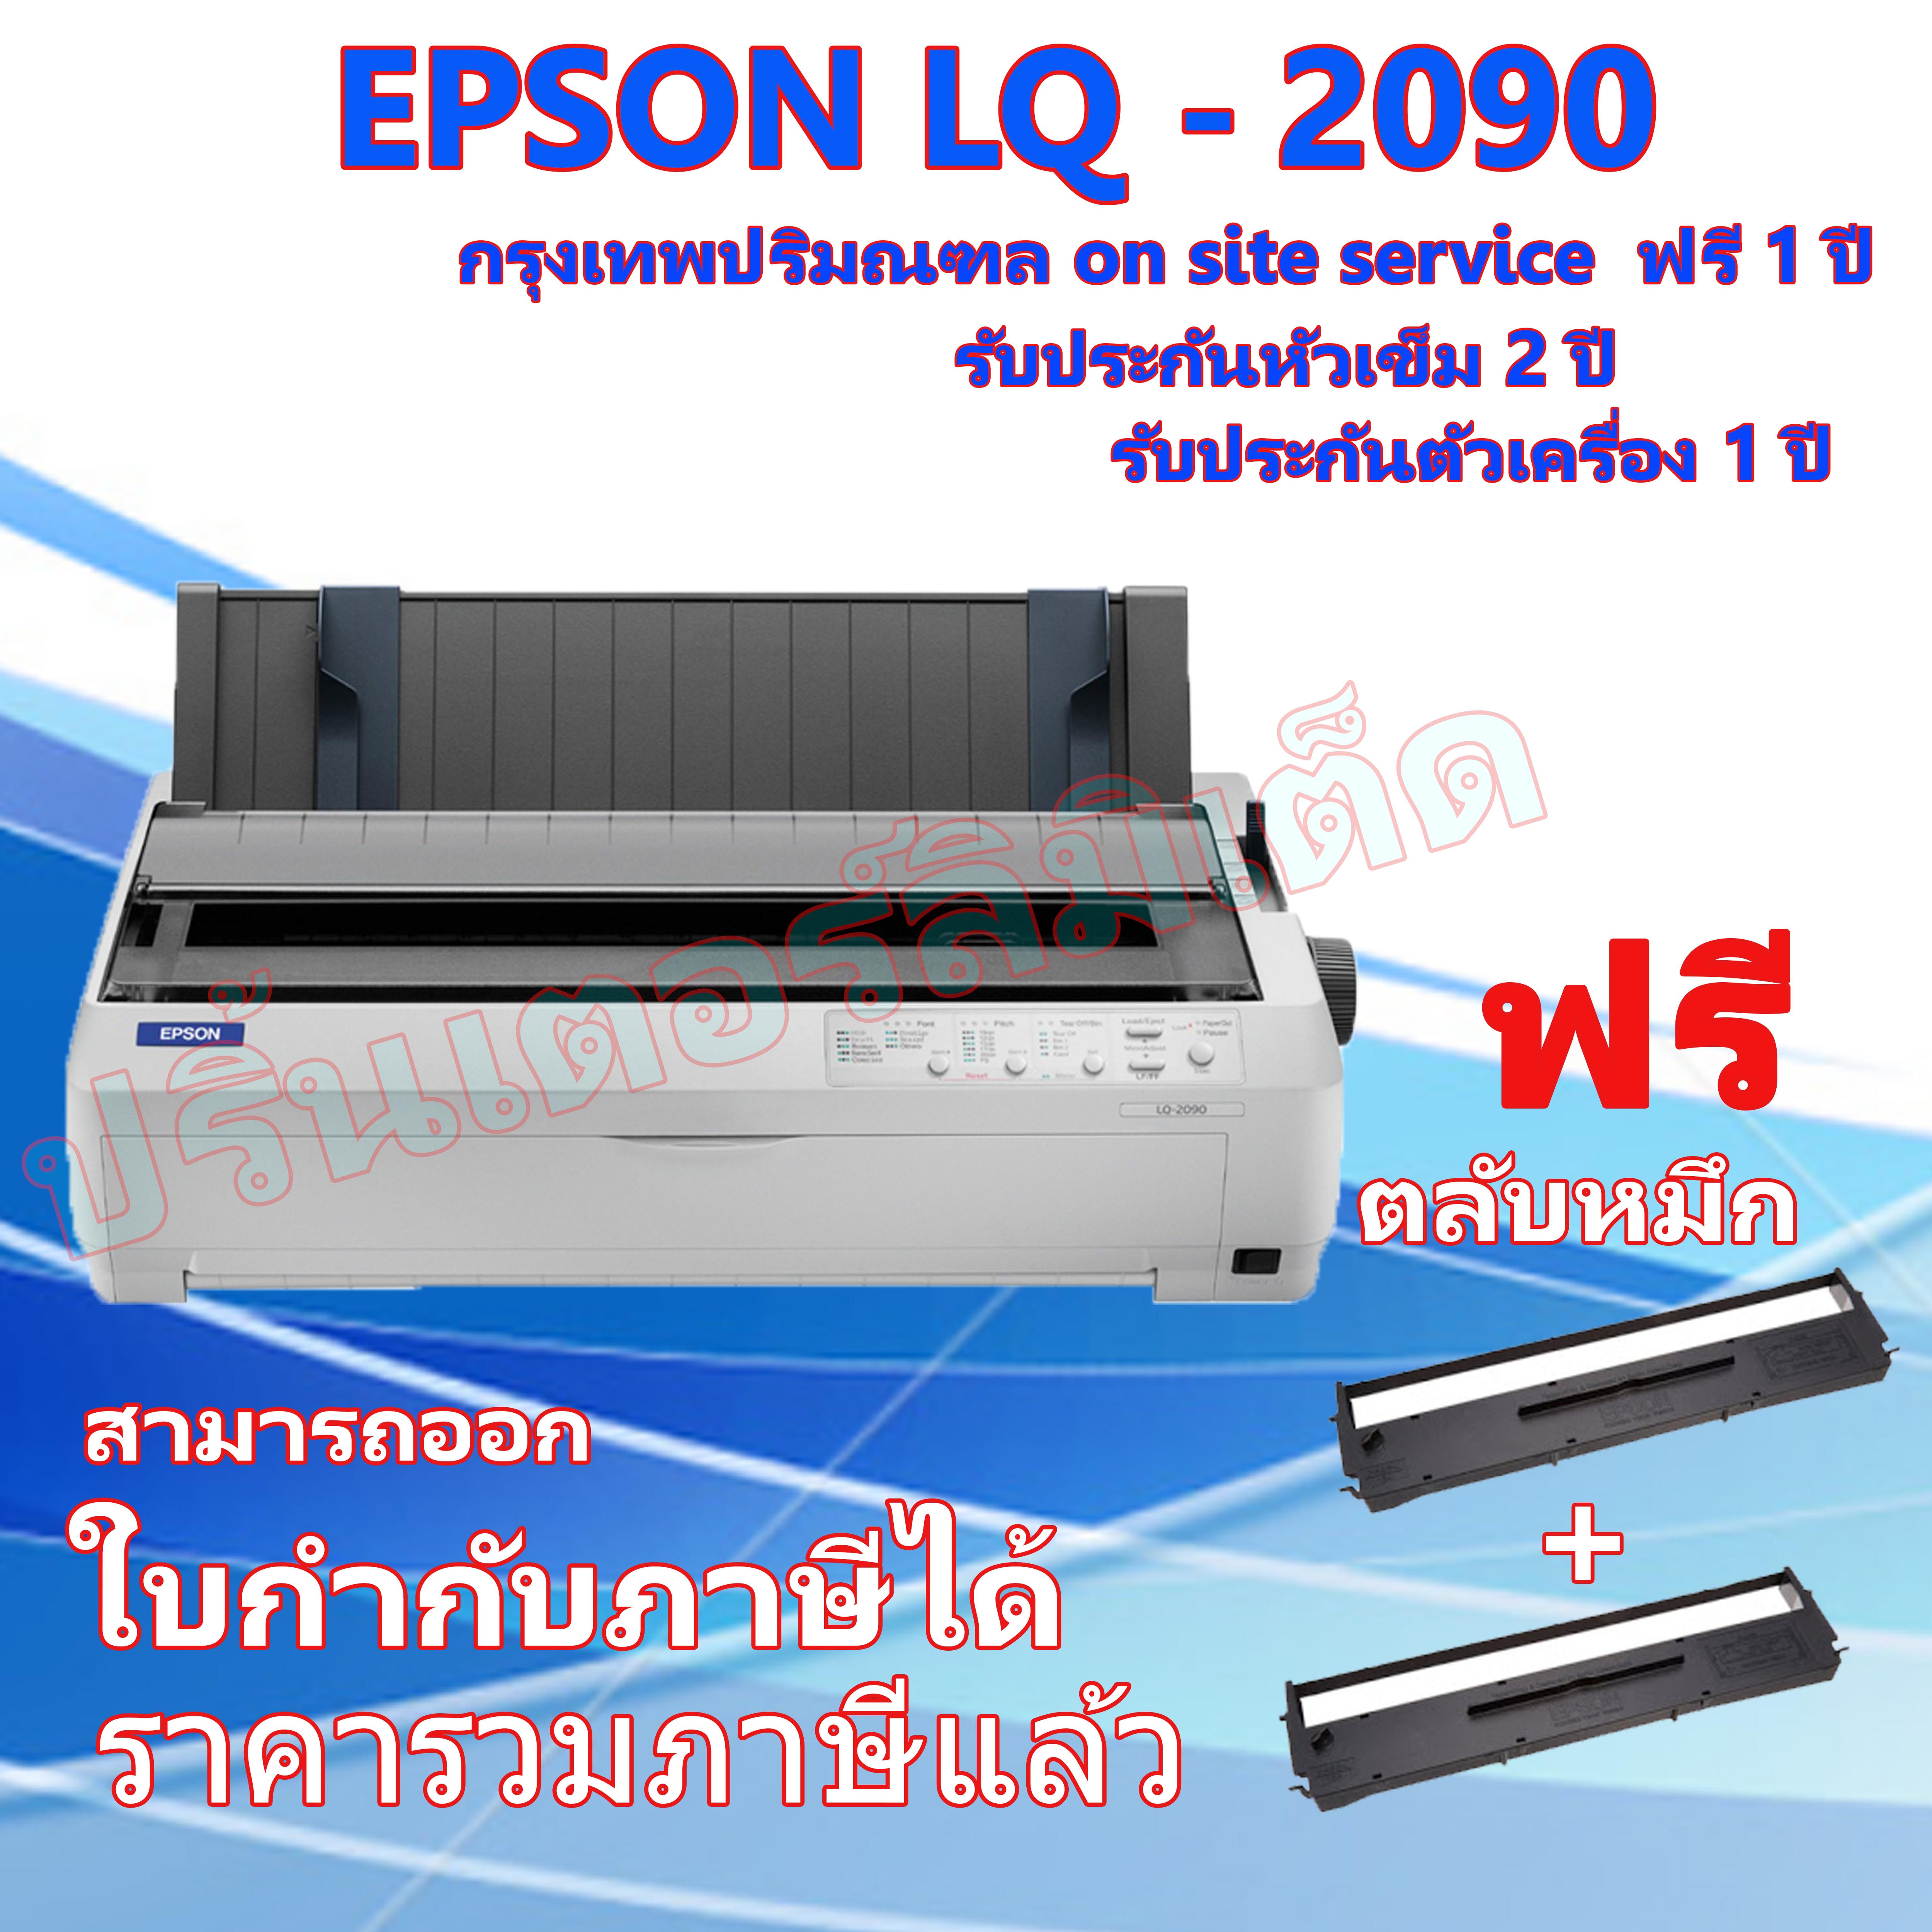 EPSON Dot Matrix Printer LQ-2090 รับประกันตัวเครื่อง 1ปี หัวเข็ม 2ปี on-site service ฟรี 1ปี กรุงเทพ-ปริมลฑล